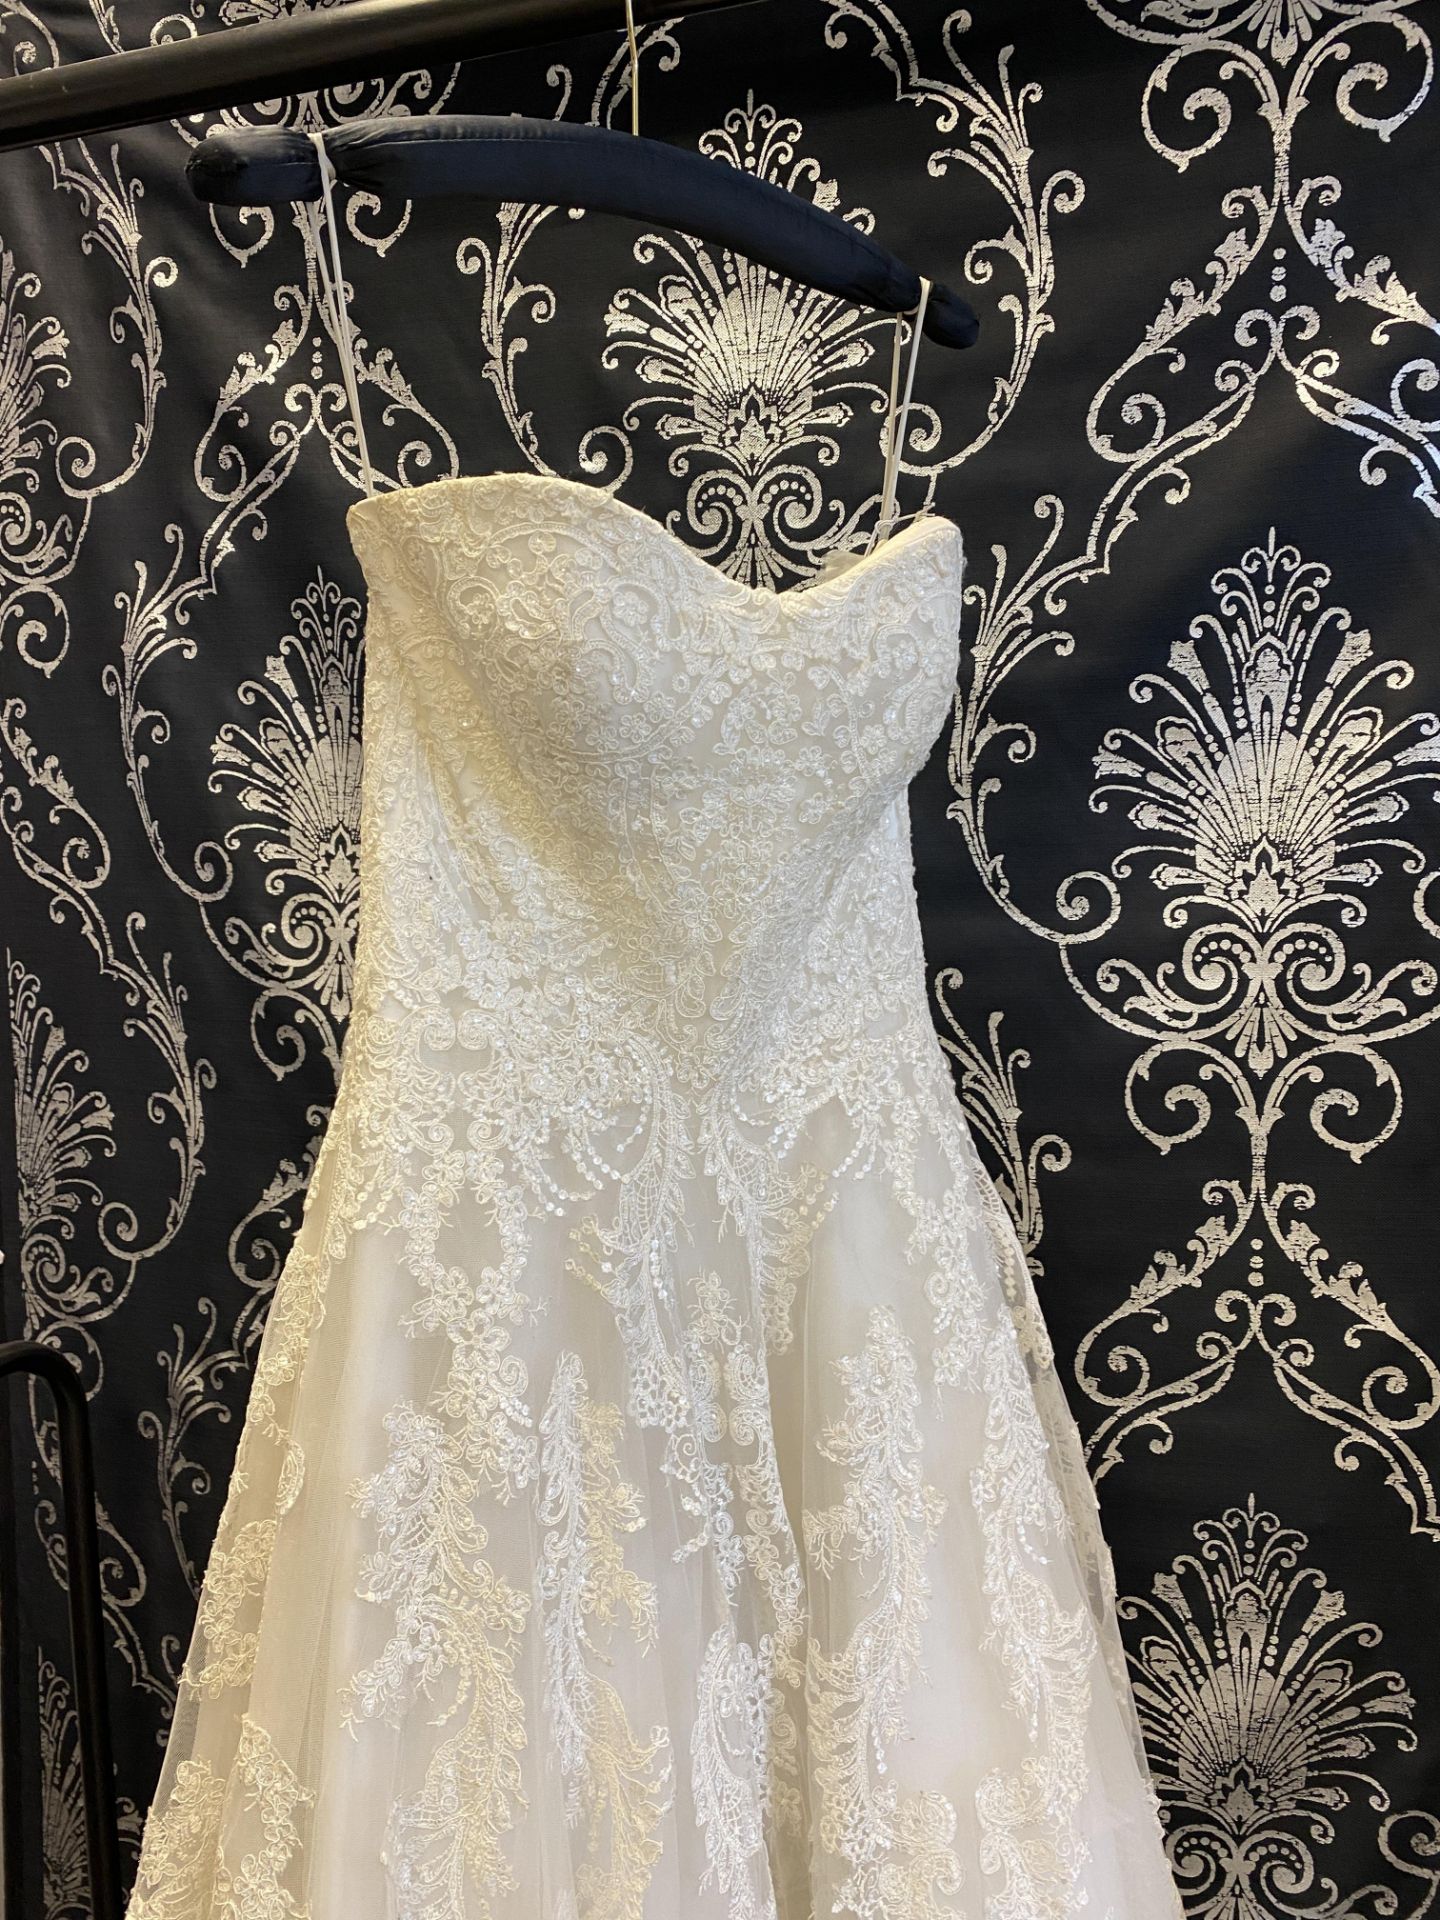 1 x MORI LEE '2787' Stunning Strapless Lace And Chiffon Designer Wedding Dress RRP £1,200 UK 12 - Image 6 of 12